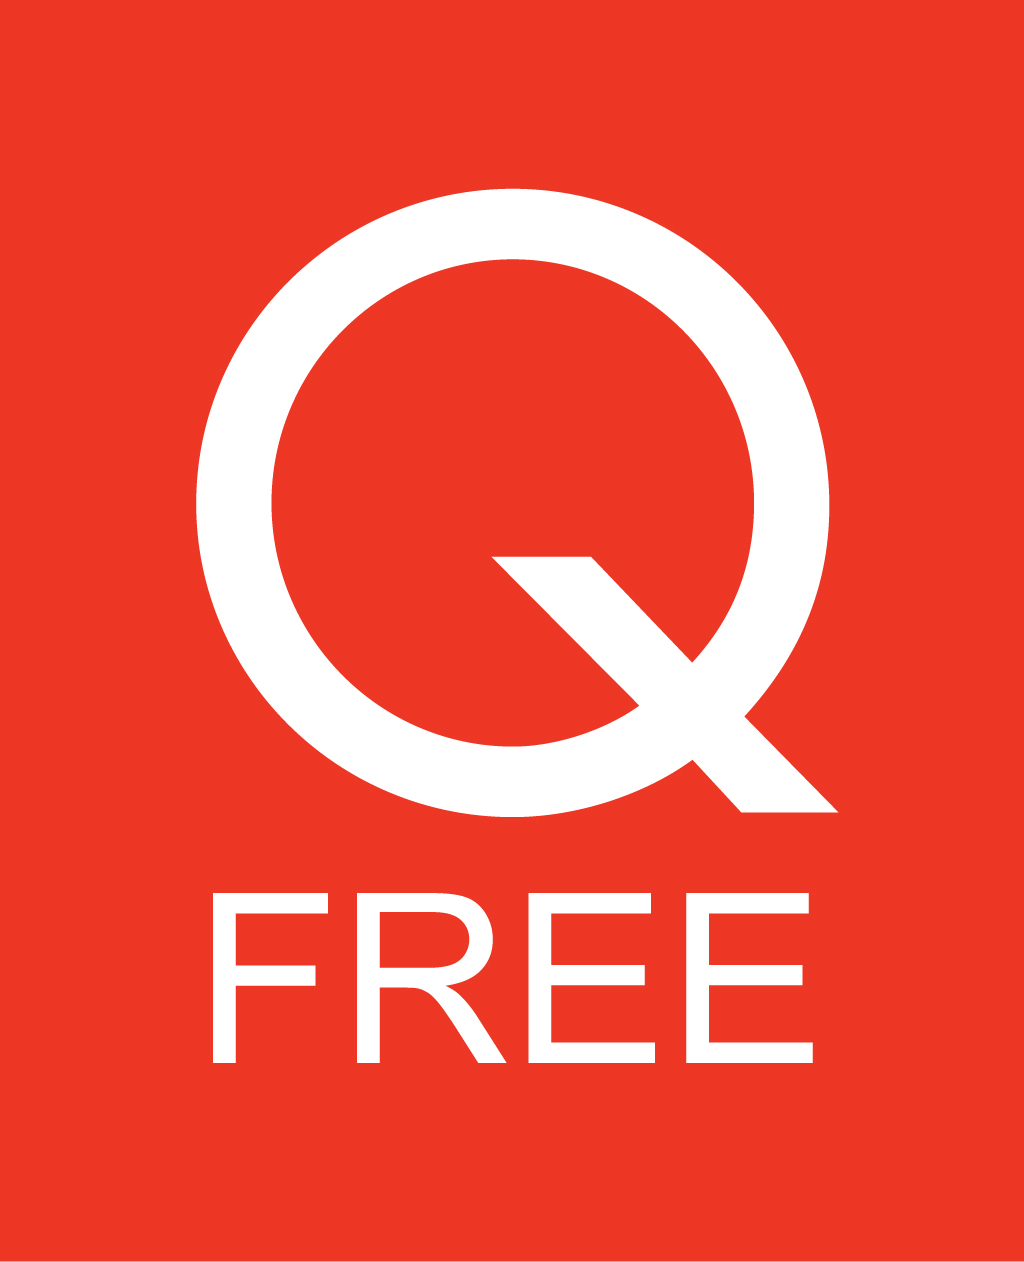 Q- Free